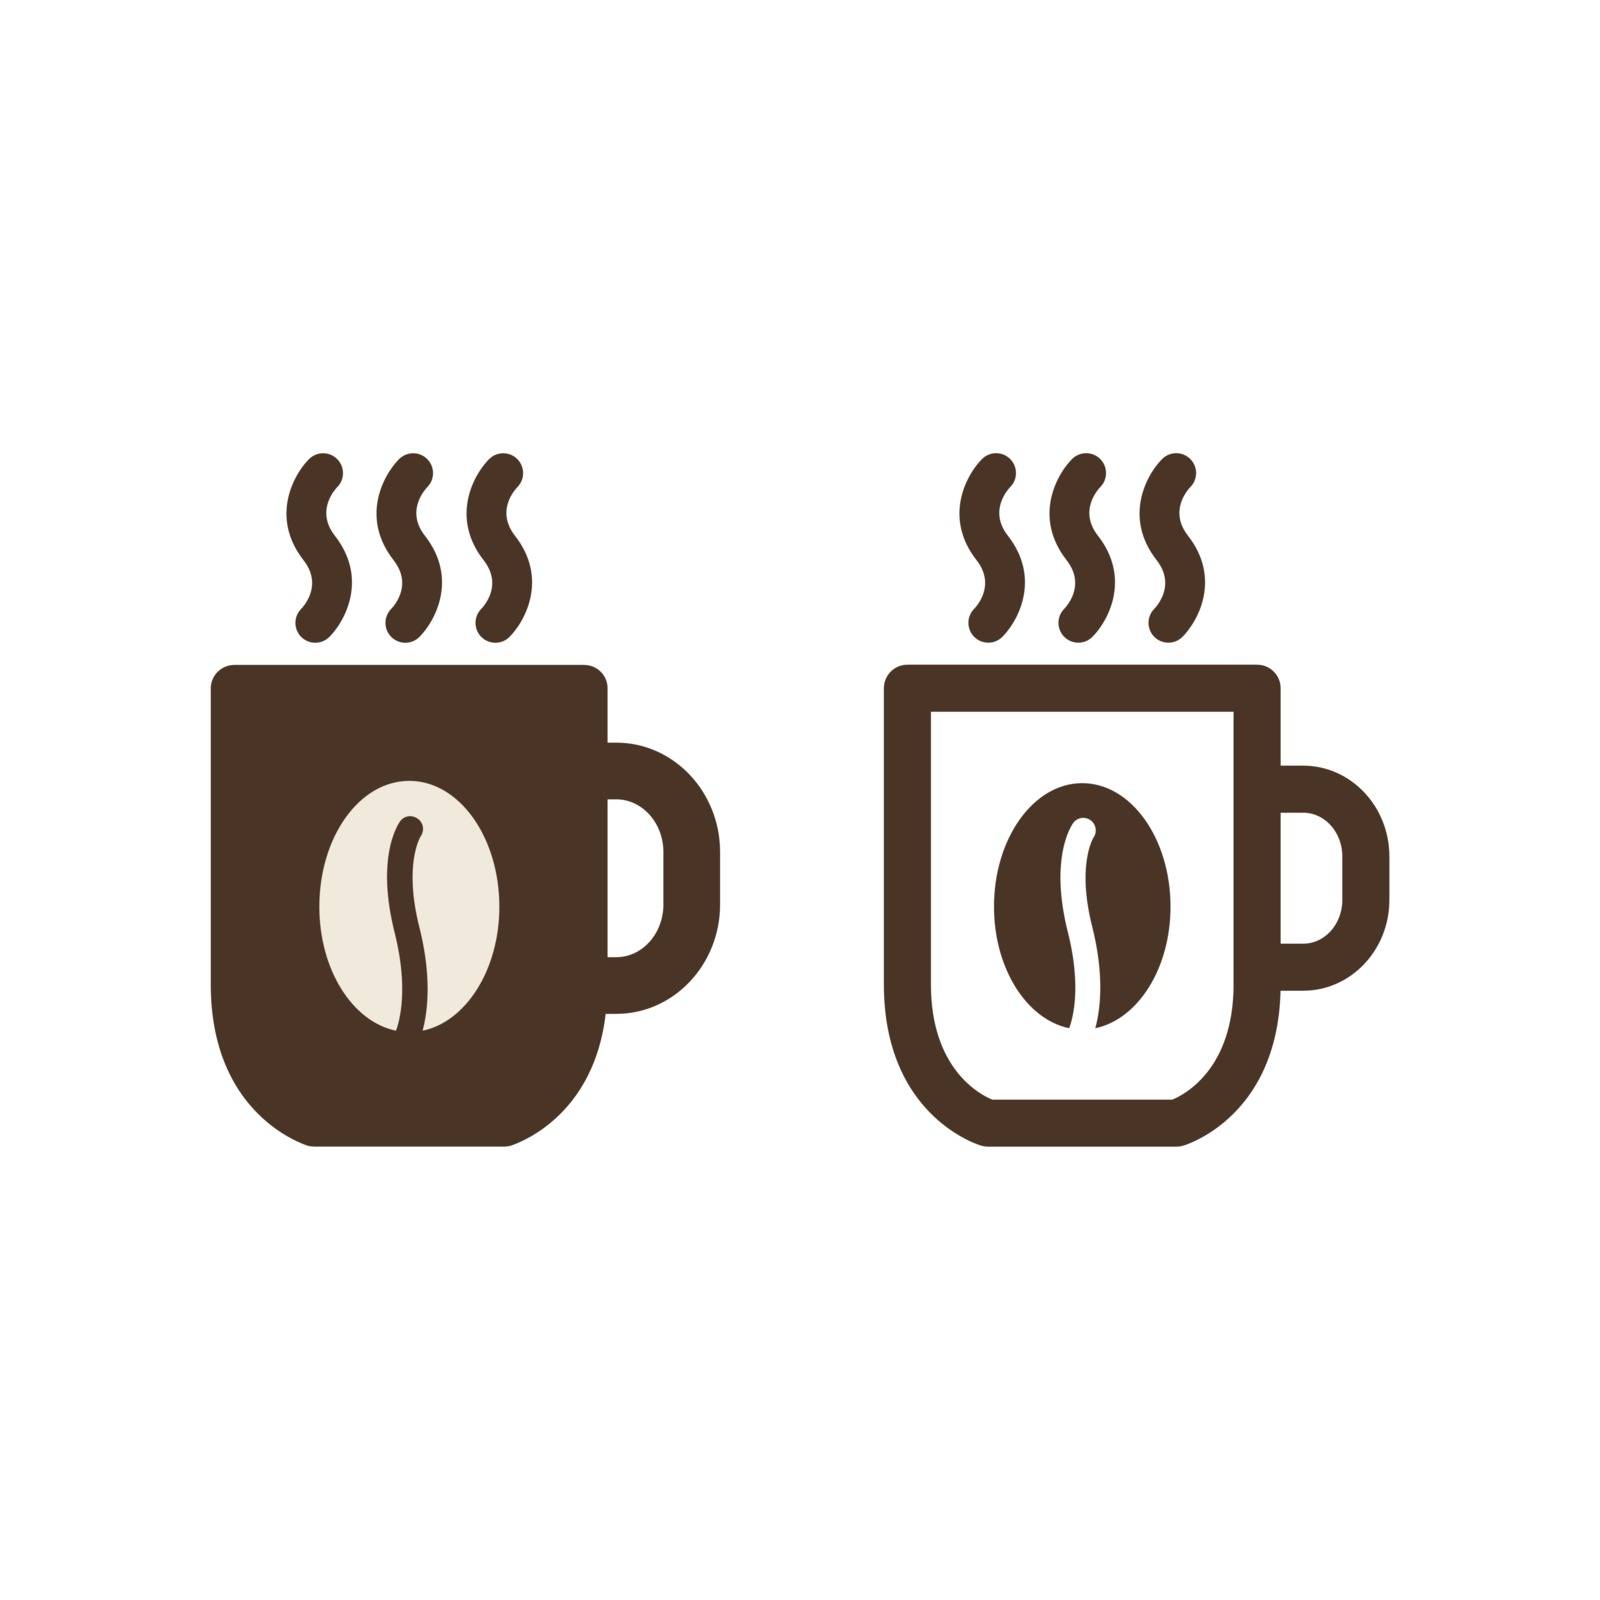 Hot mug with steam symbol